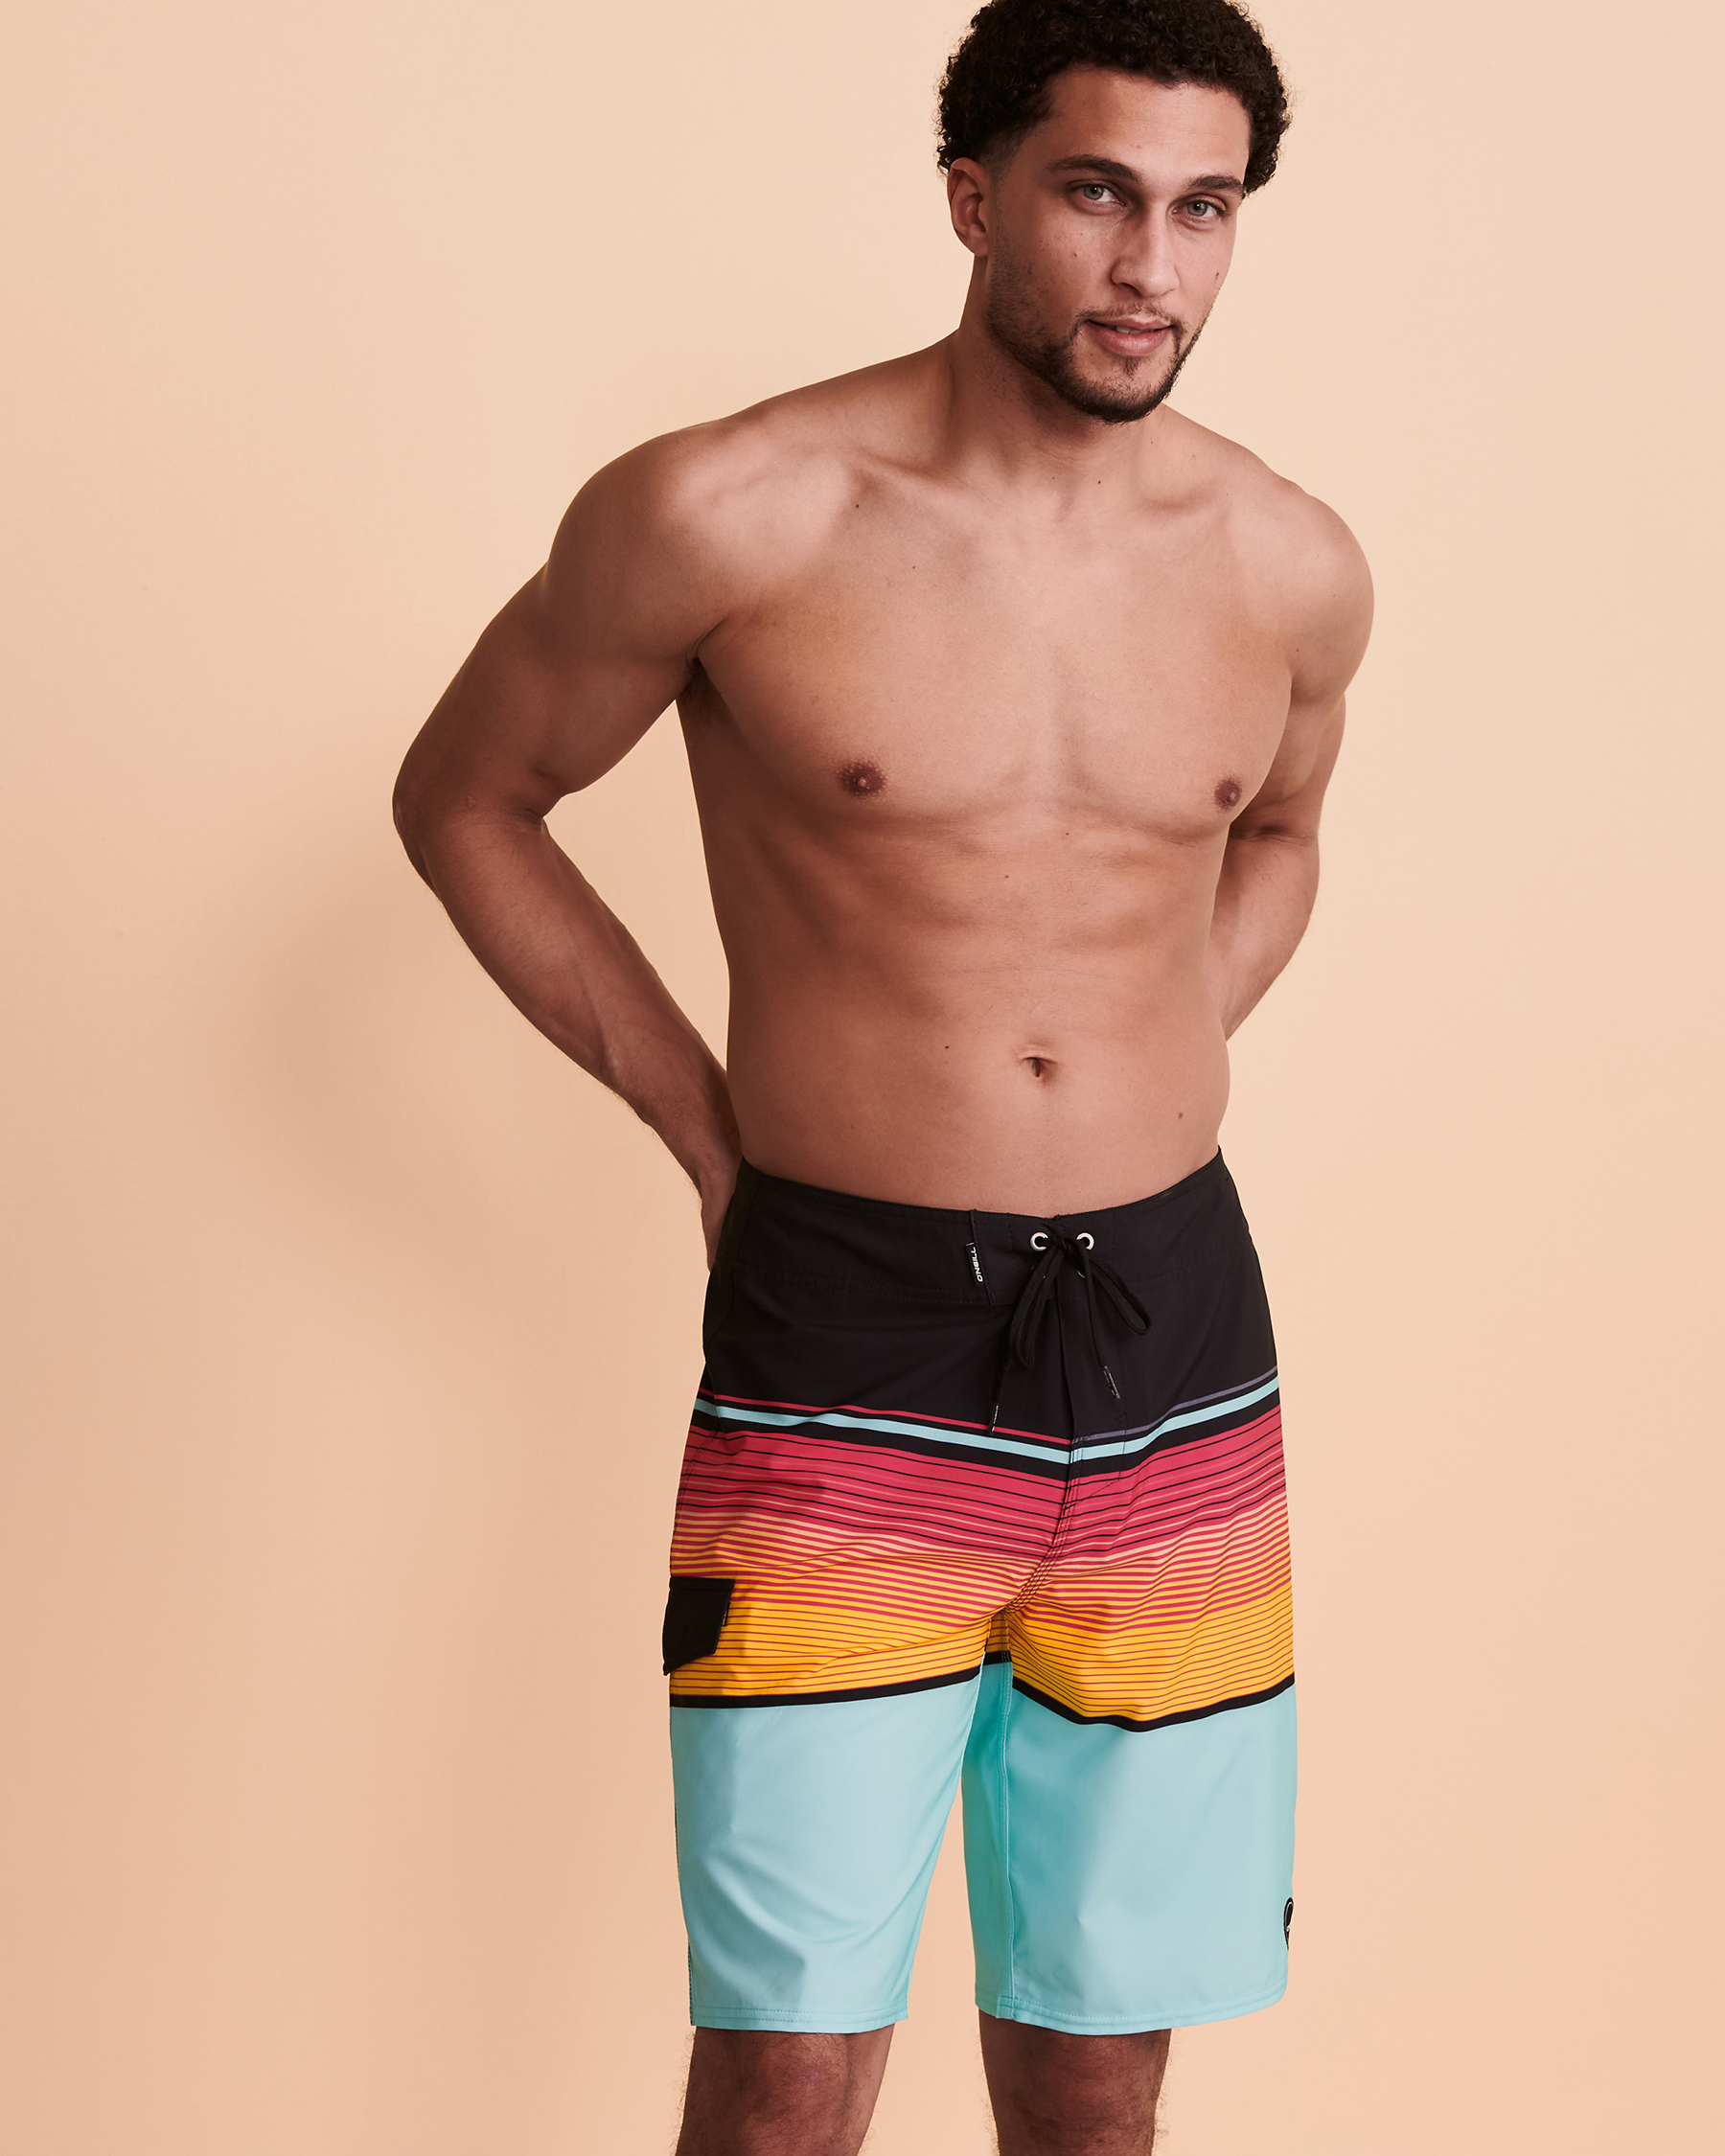 O'NEILL LENNOX STRETCH Boardshort Swimsuit Multi stripes SP2106011 - View5